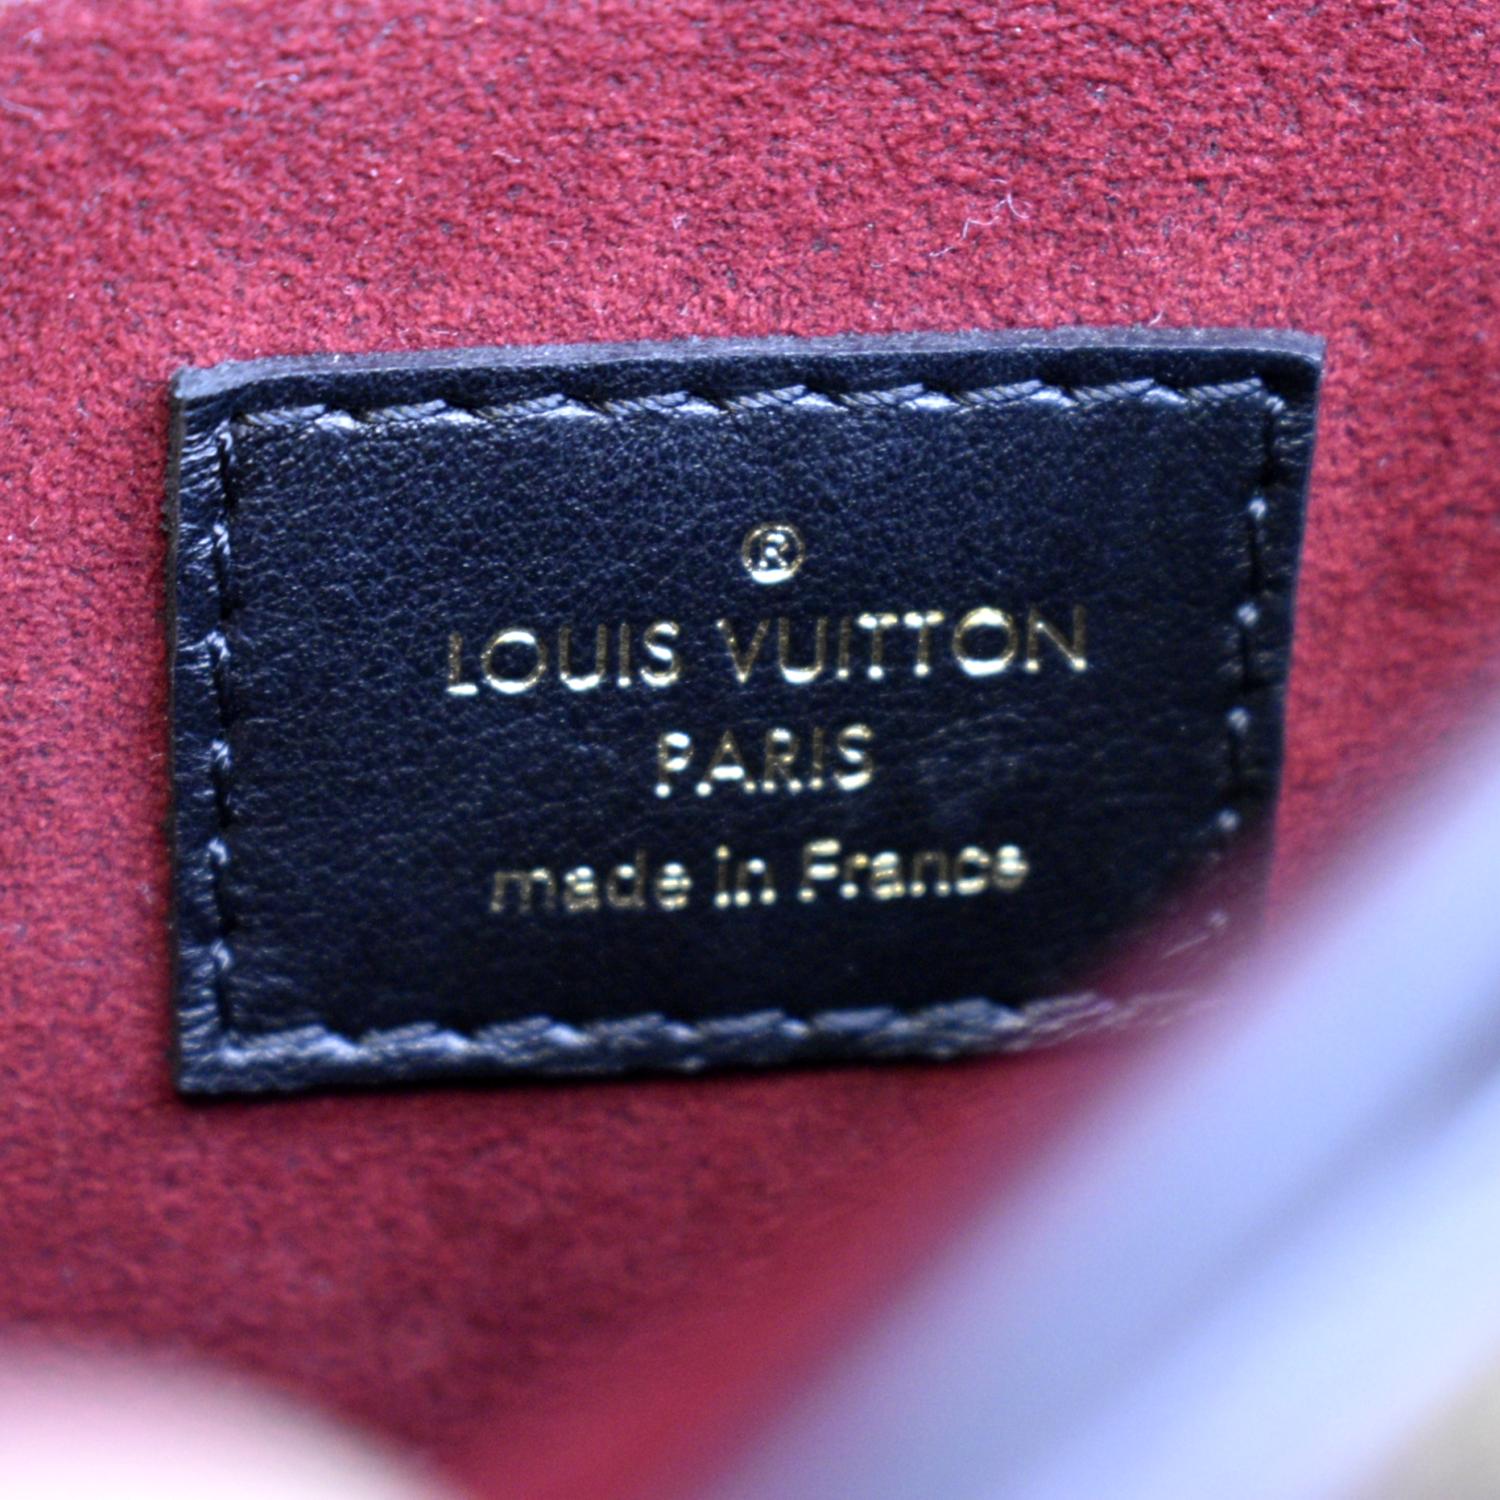 Louis+Vuitton+Passy+Shoulder+Bag+Brown+Canvas+Coated+Monogram for